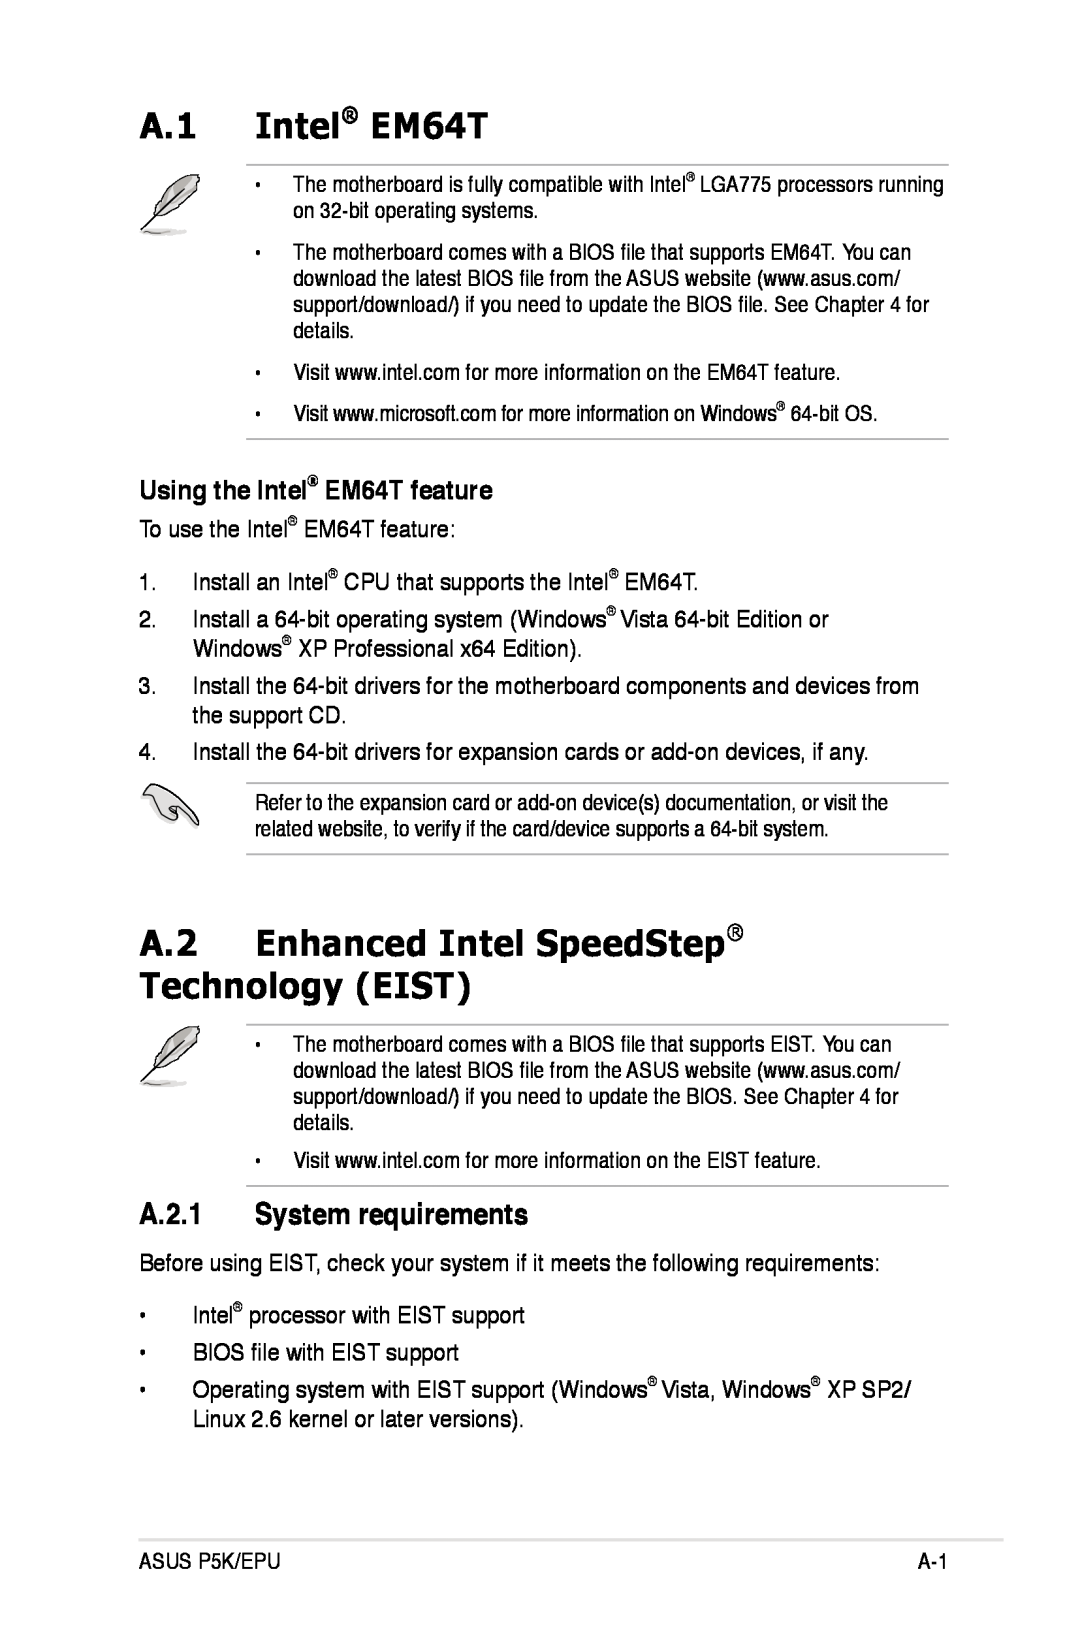 Asus P5K/EPU manual A.1 Intel EM64T, A.2 Enhanced Intel SpeedStep Technology EIST, A.2.1 System requirements 